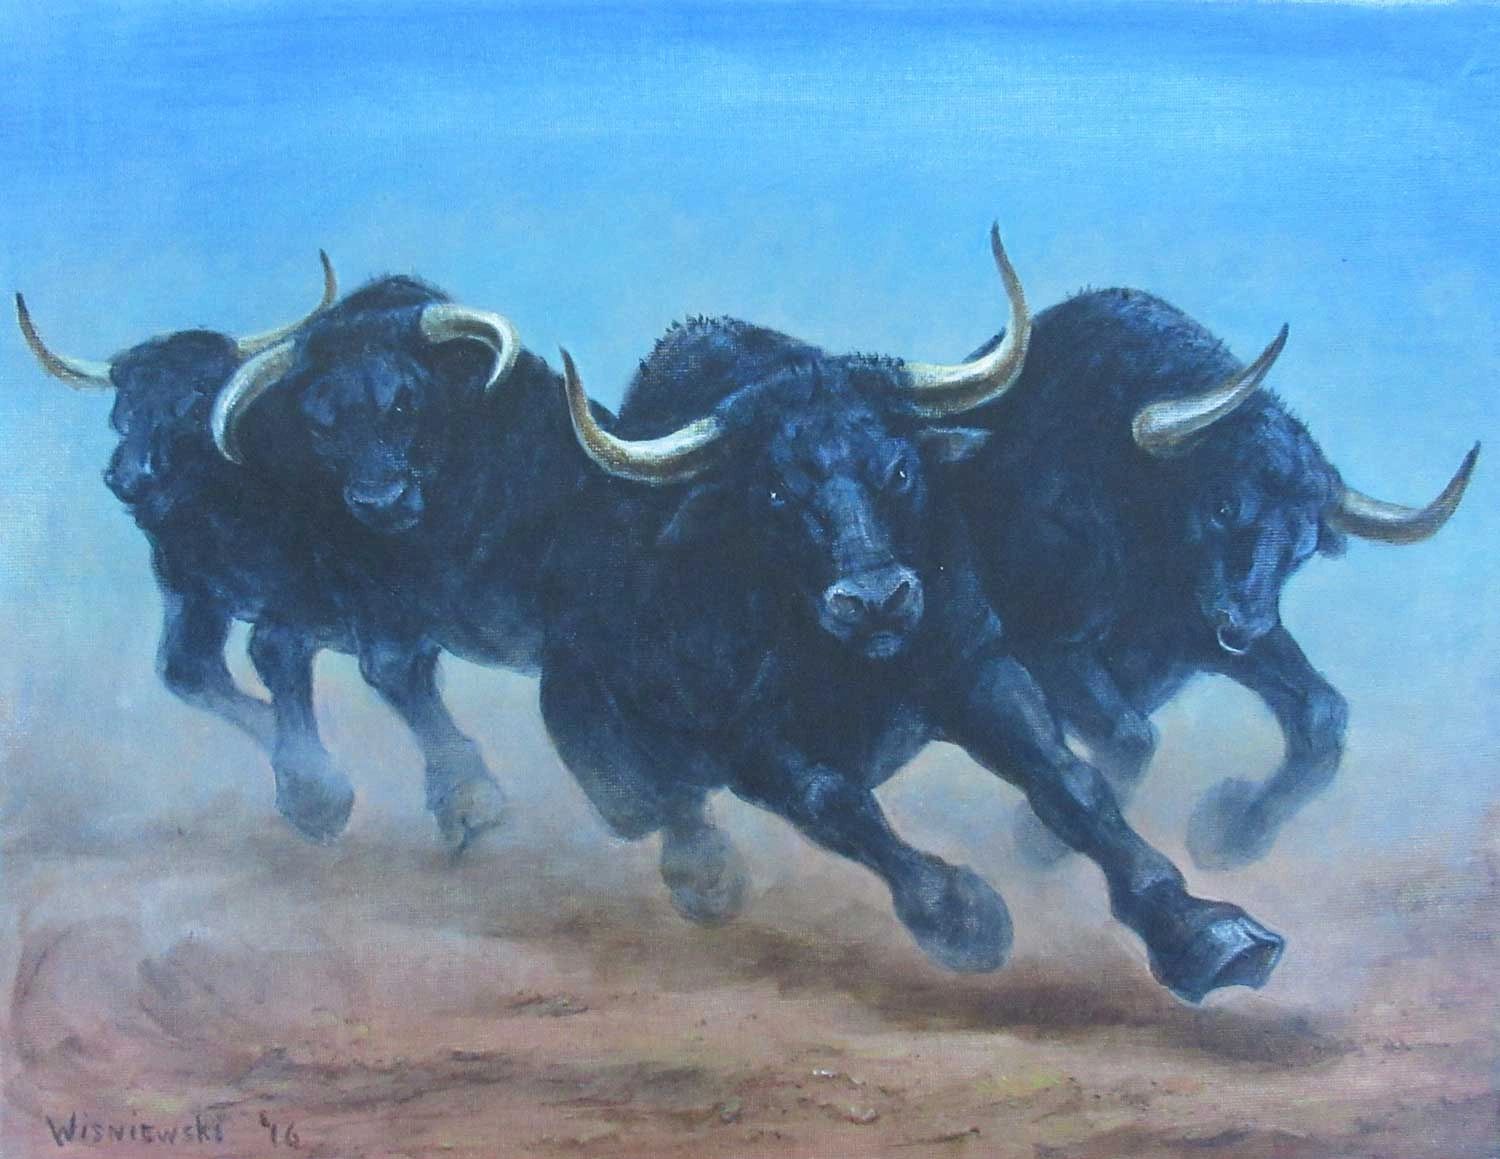 Bulls charging. Acrylic painting by Stan Wisniewski.